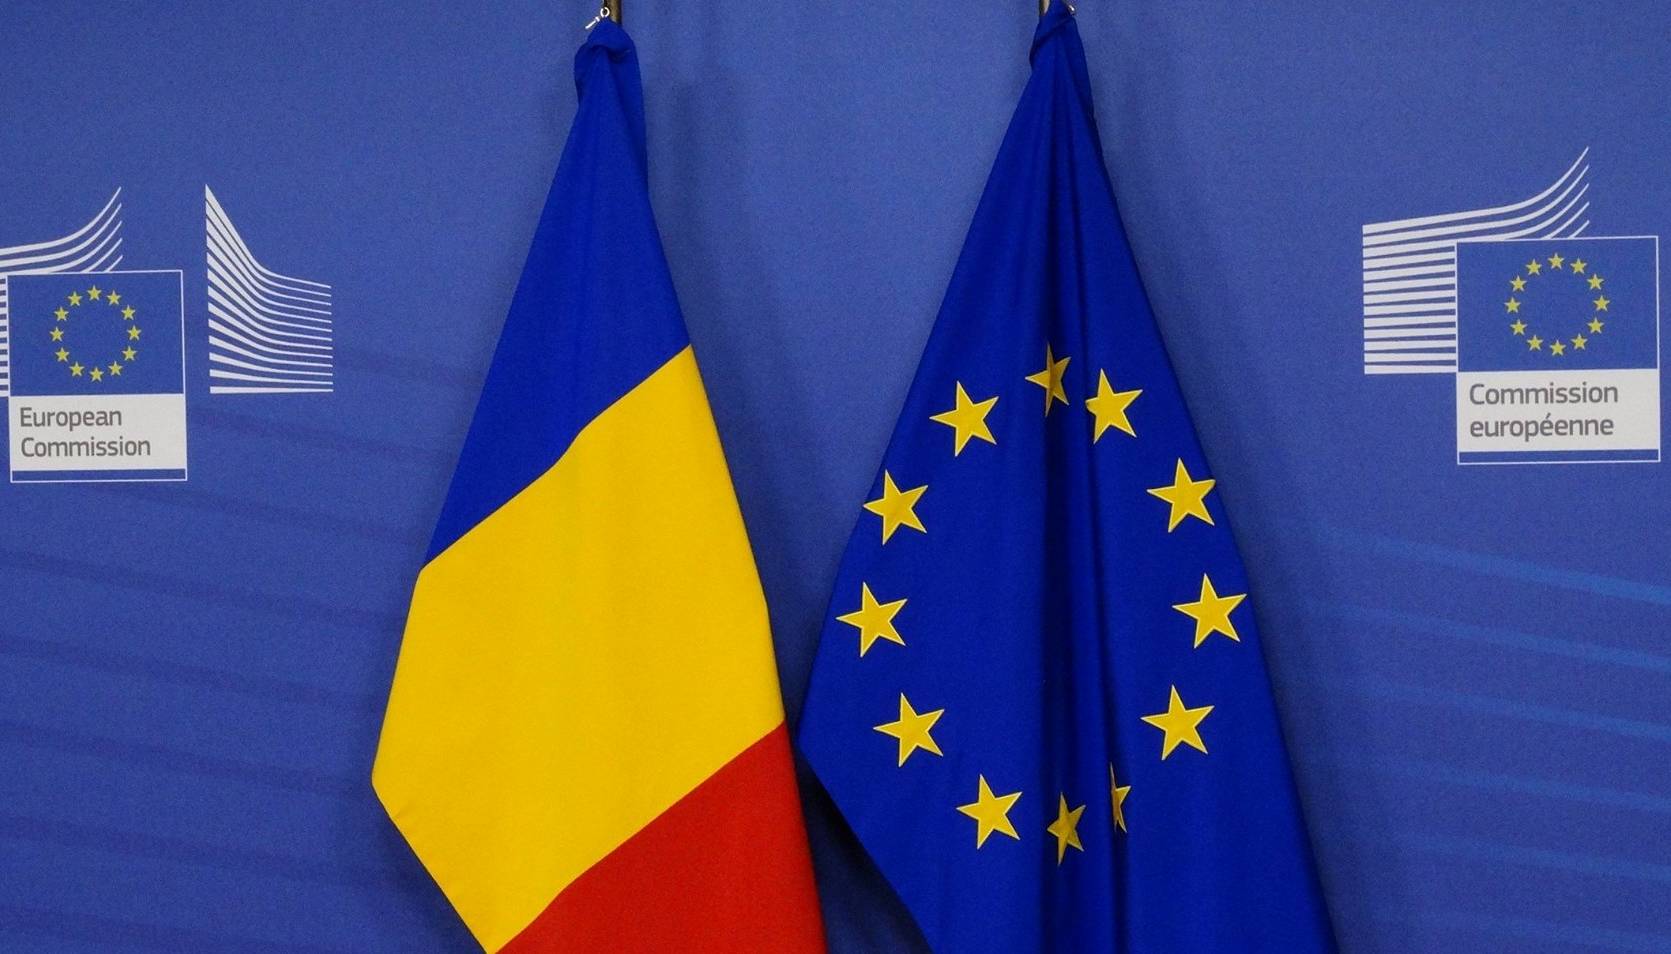 Comisia Europeana Zeci Vehicule Interventie Trimise Franta Ucraina